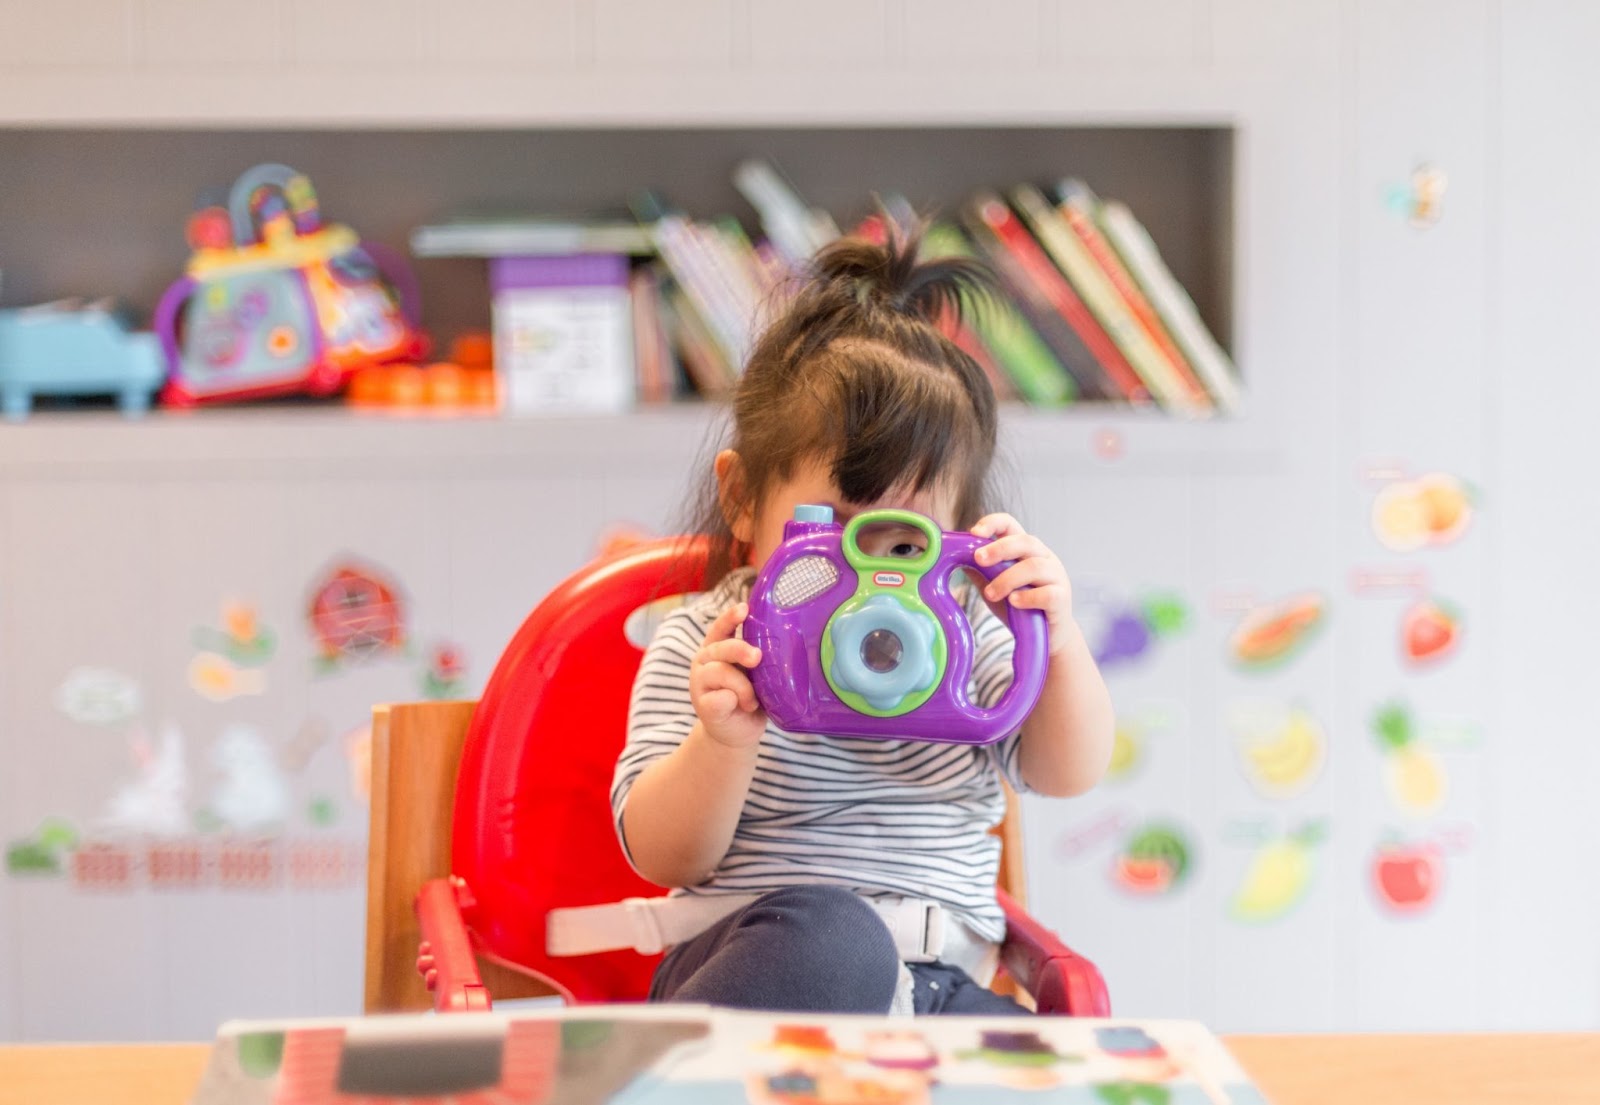 Preschool-aged girl looks through a purple children’s camera lens